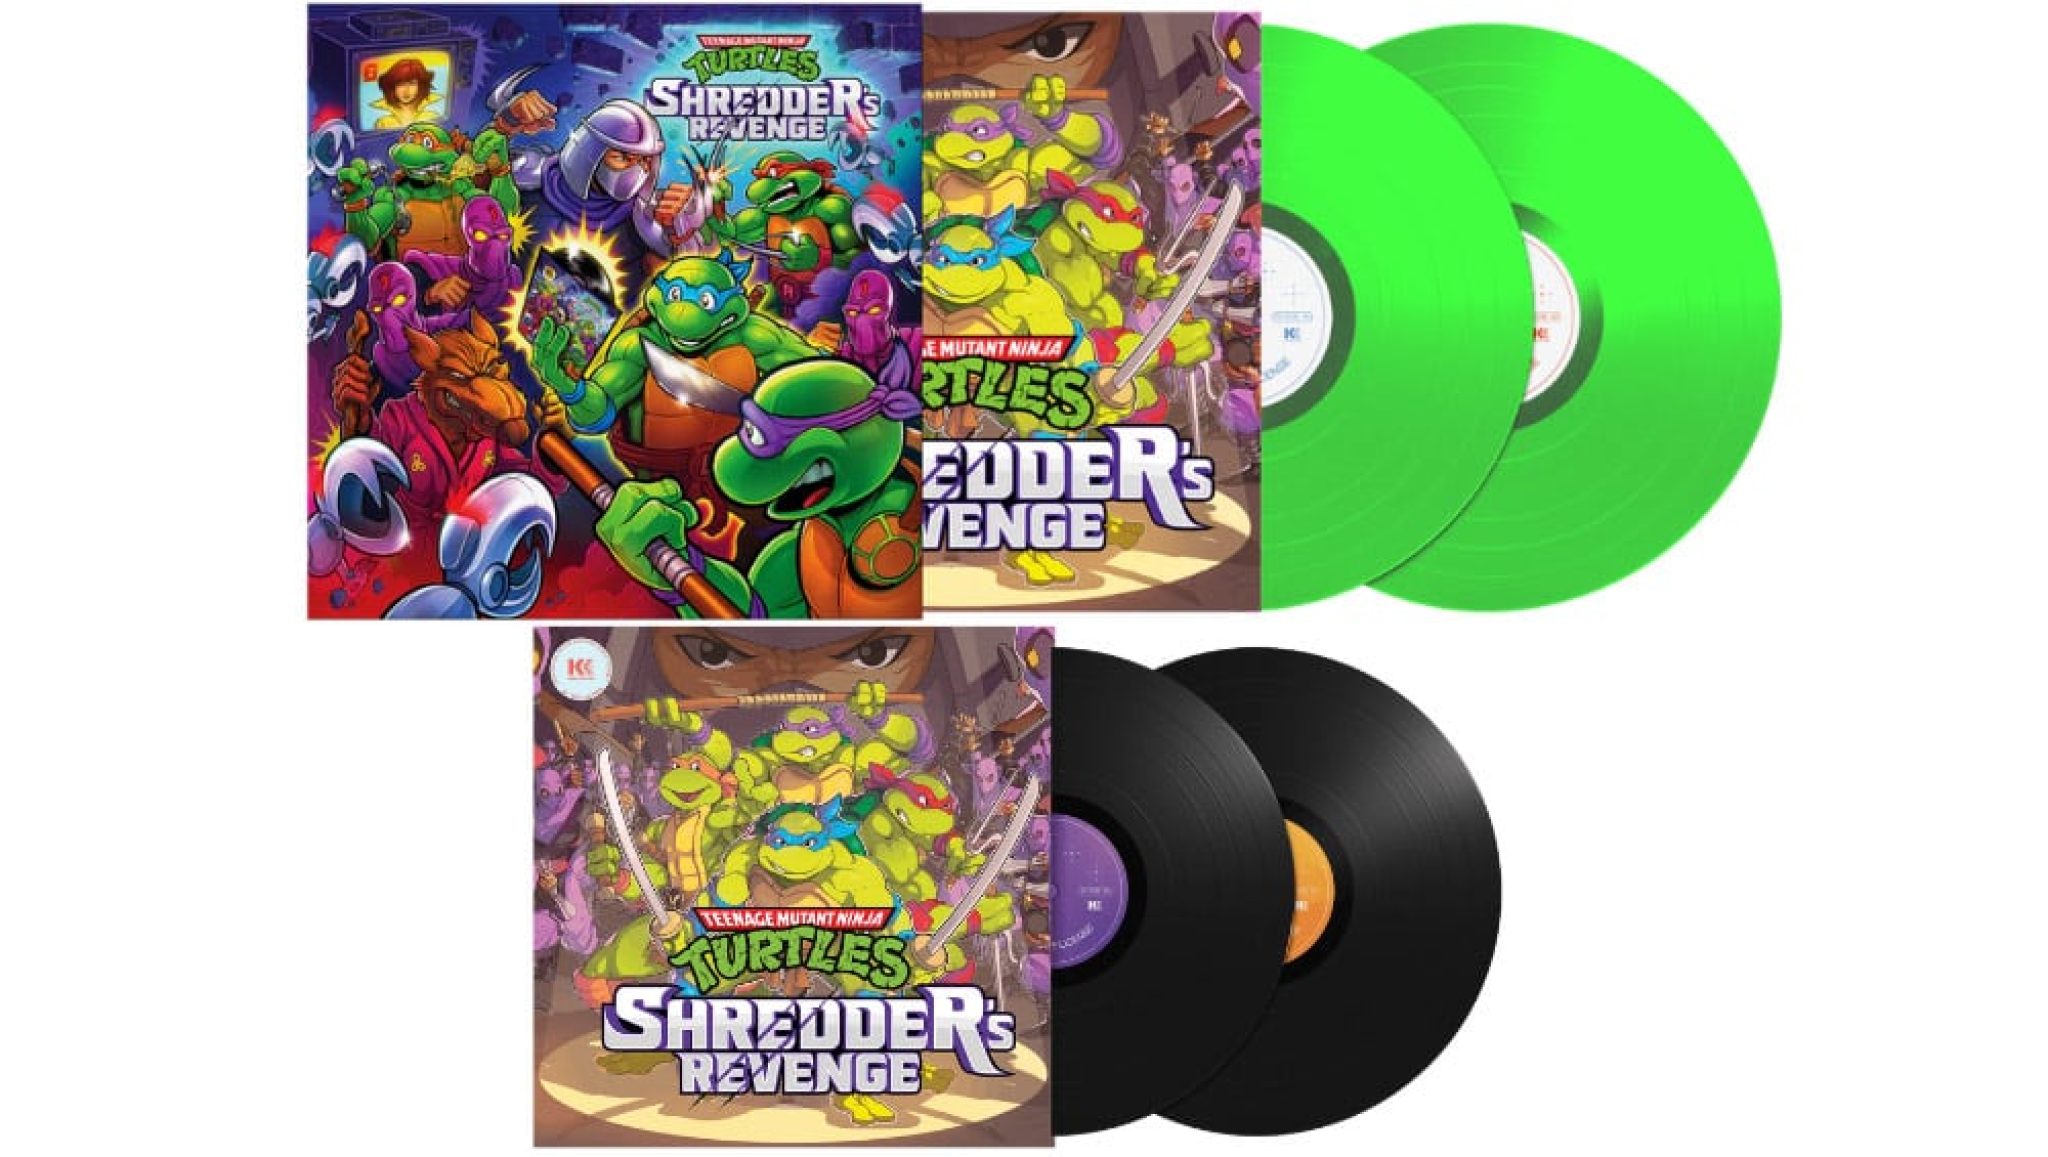 "Teenage Mutant Ninja Turtles Shredder's Revenge" Original Game